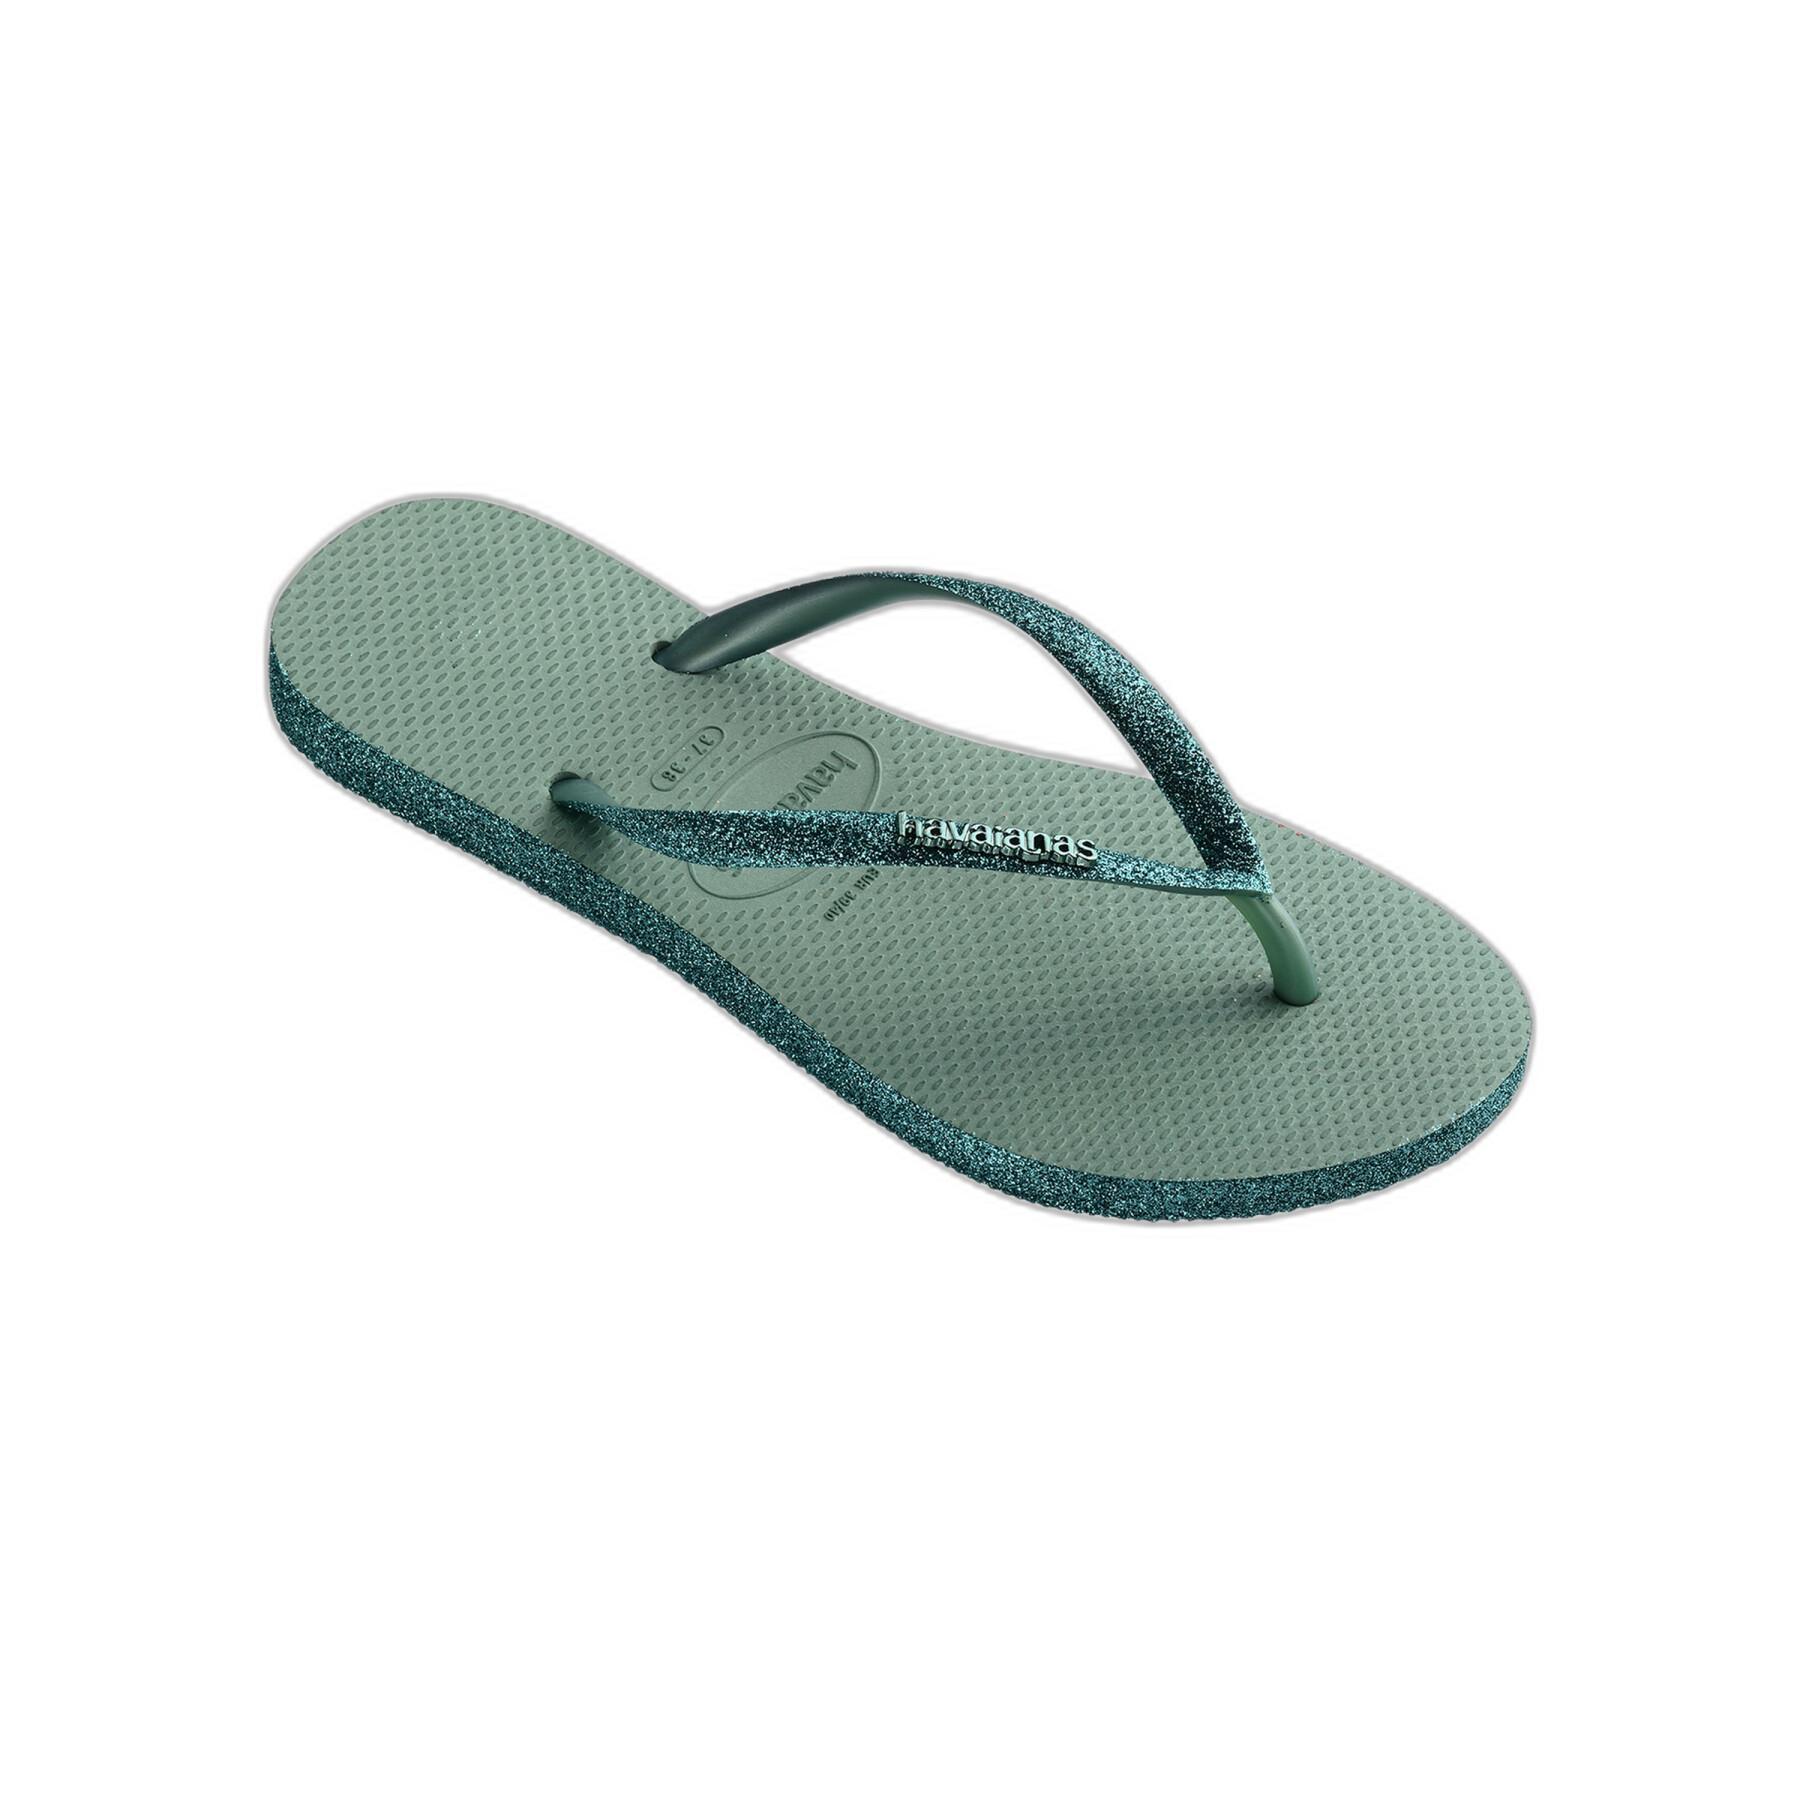 Women's sandals Havaianas Slim Sparkle II